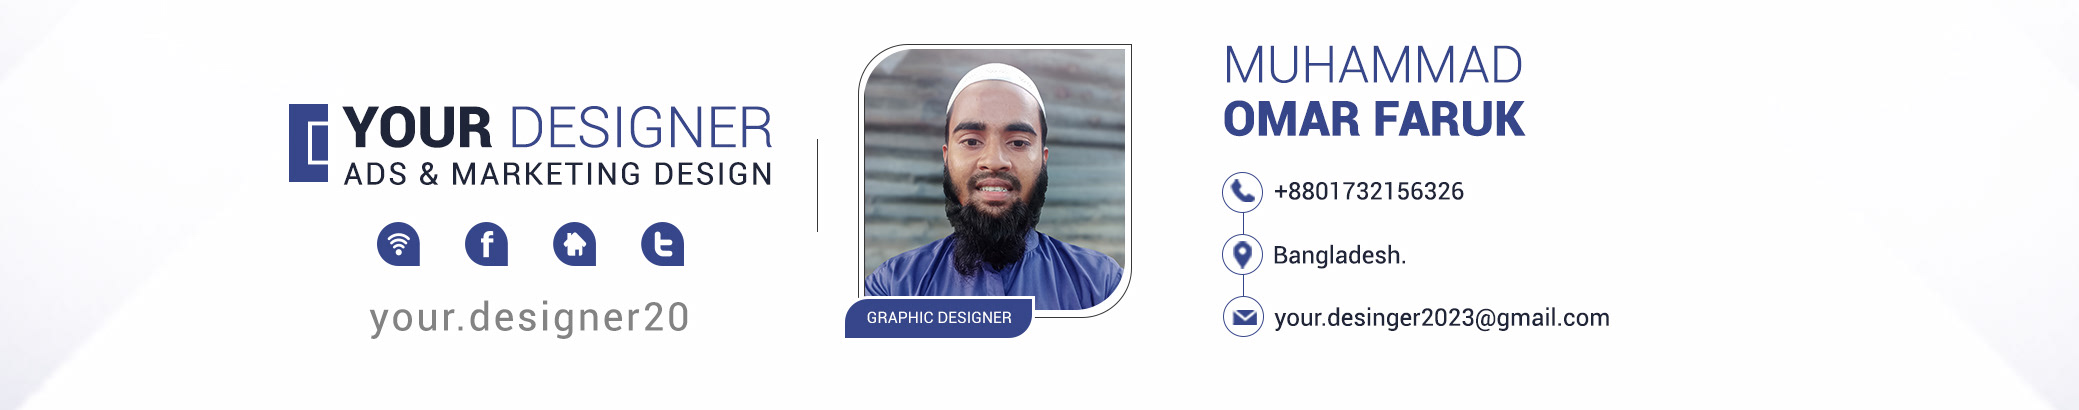 Banner de perfil de Muhammd Omar Faruk